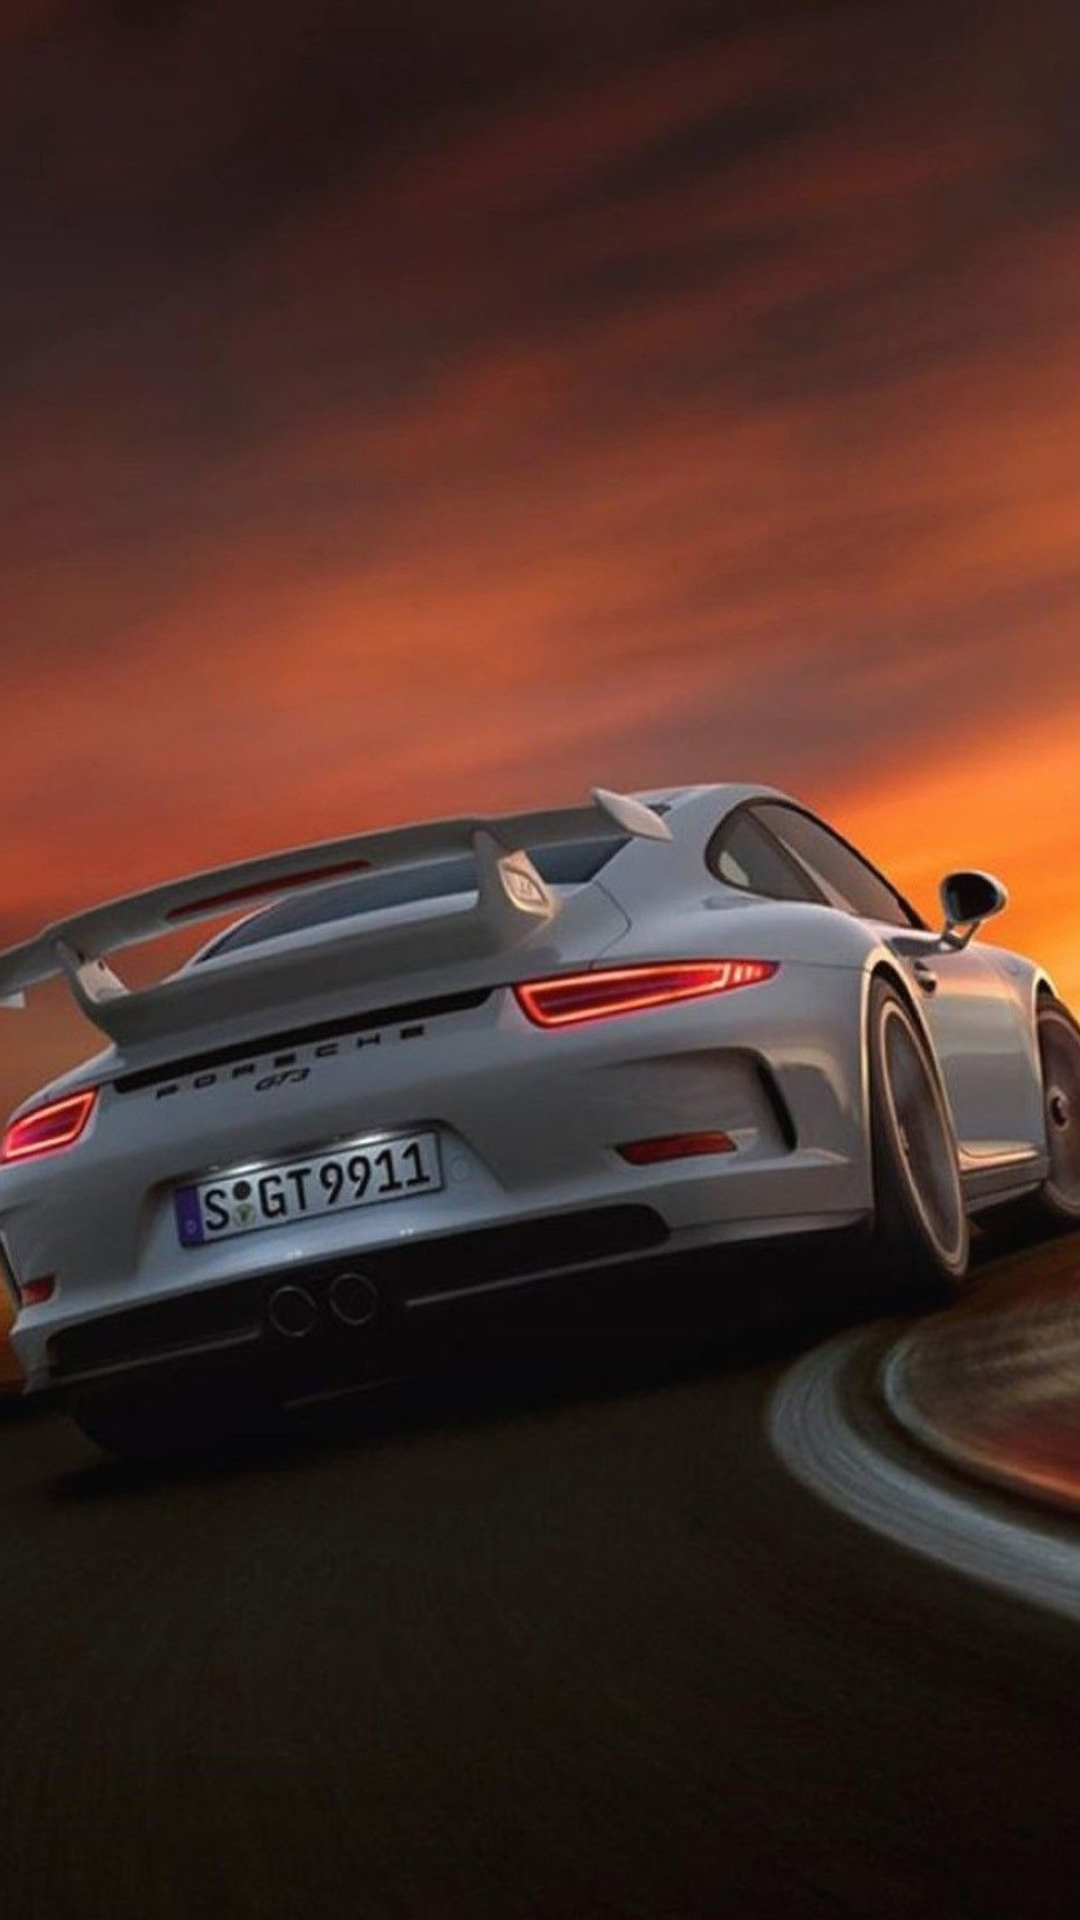 Sports Car: Porsche 911 GT3, Quick and precise steering response. 1080x1920 Full HD Wallpaper.